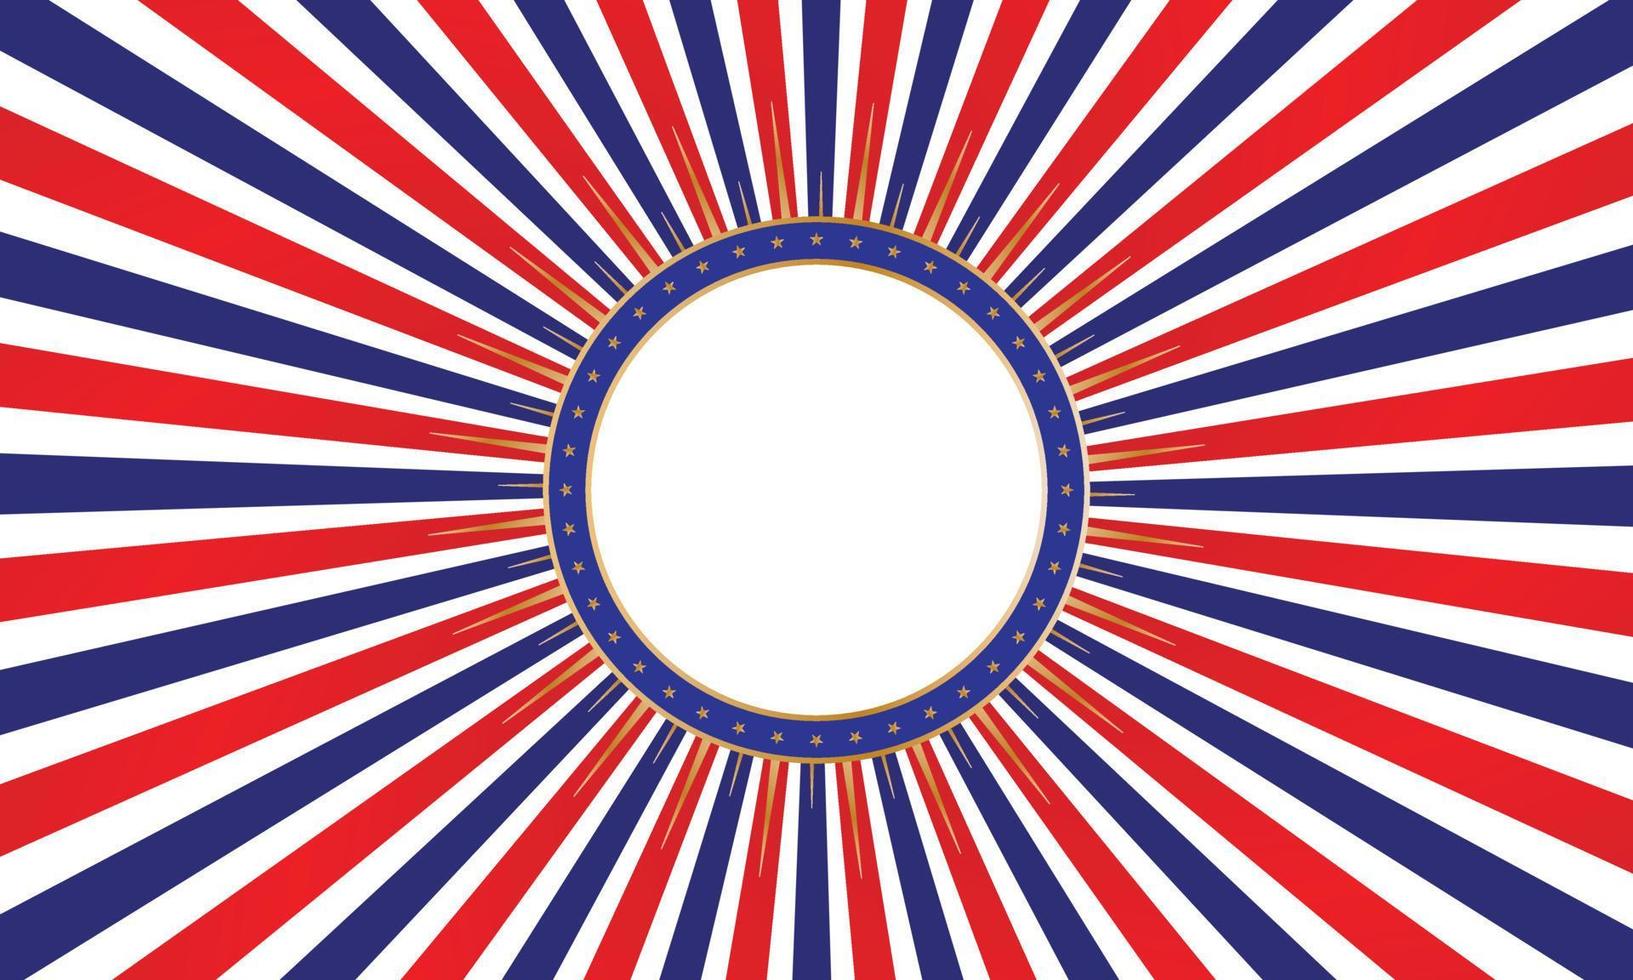 american flag sunburst background vector